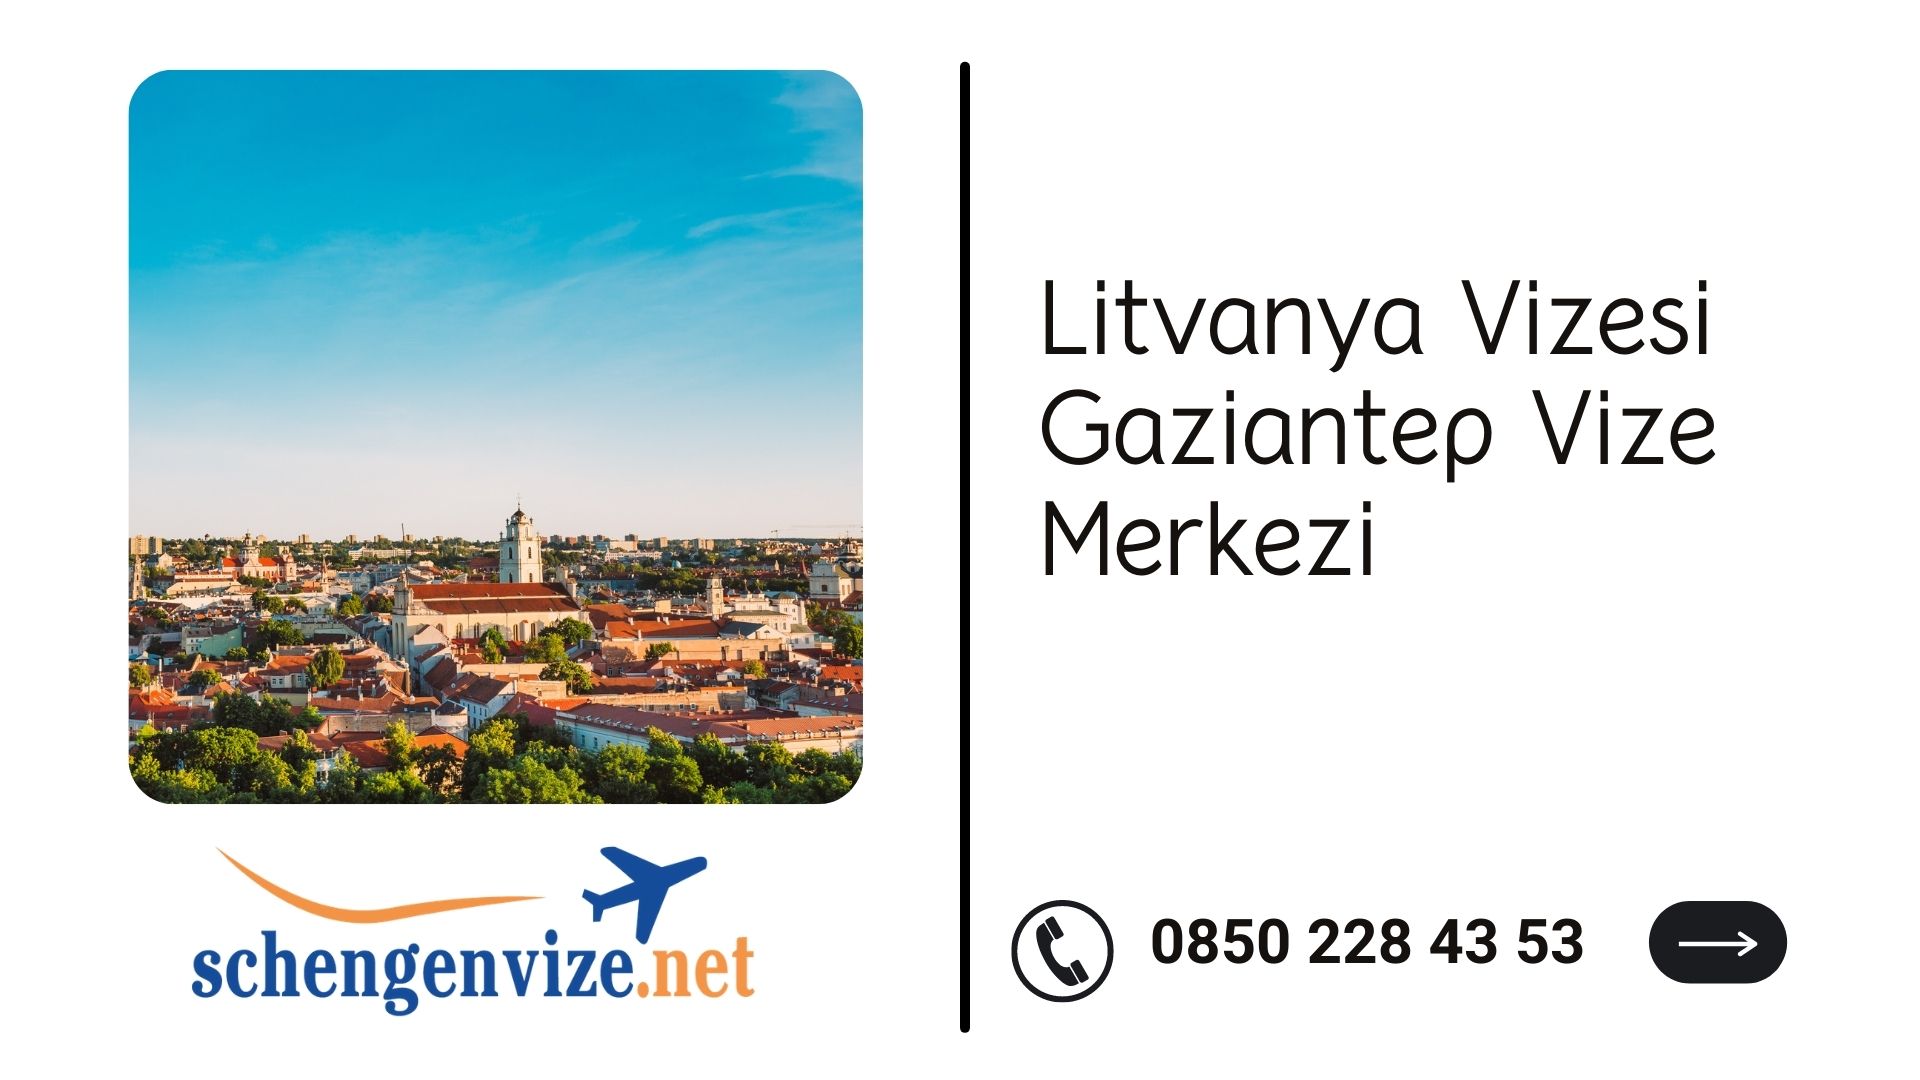 Litvanya Vizesi Gaziantep Vize Merkezi